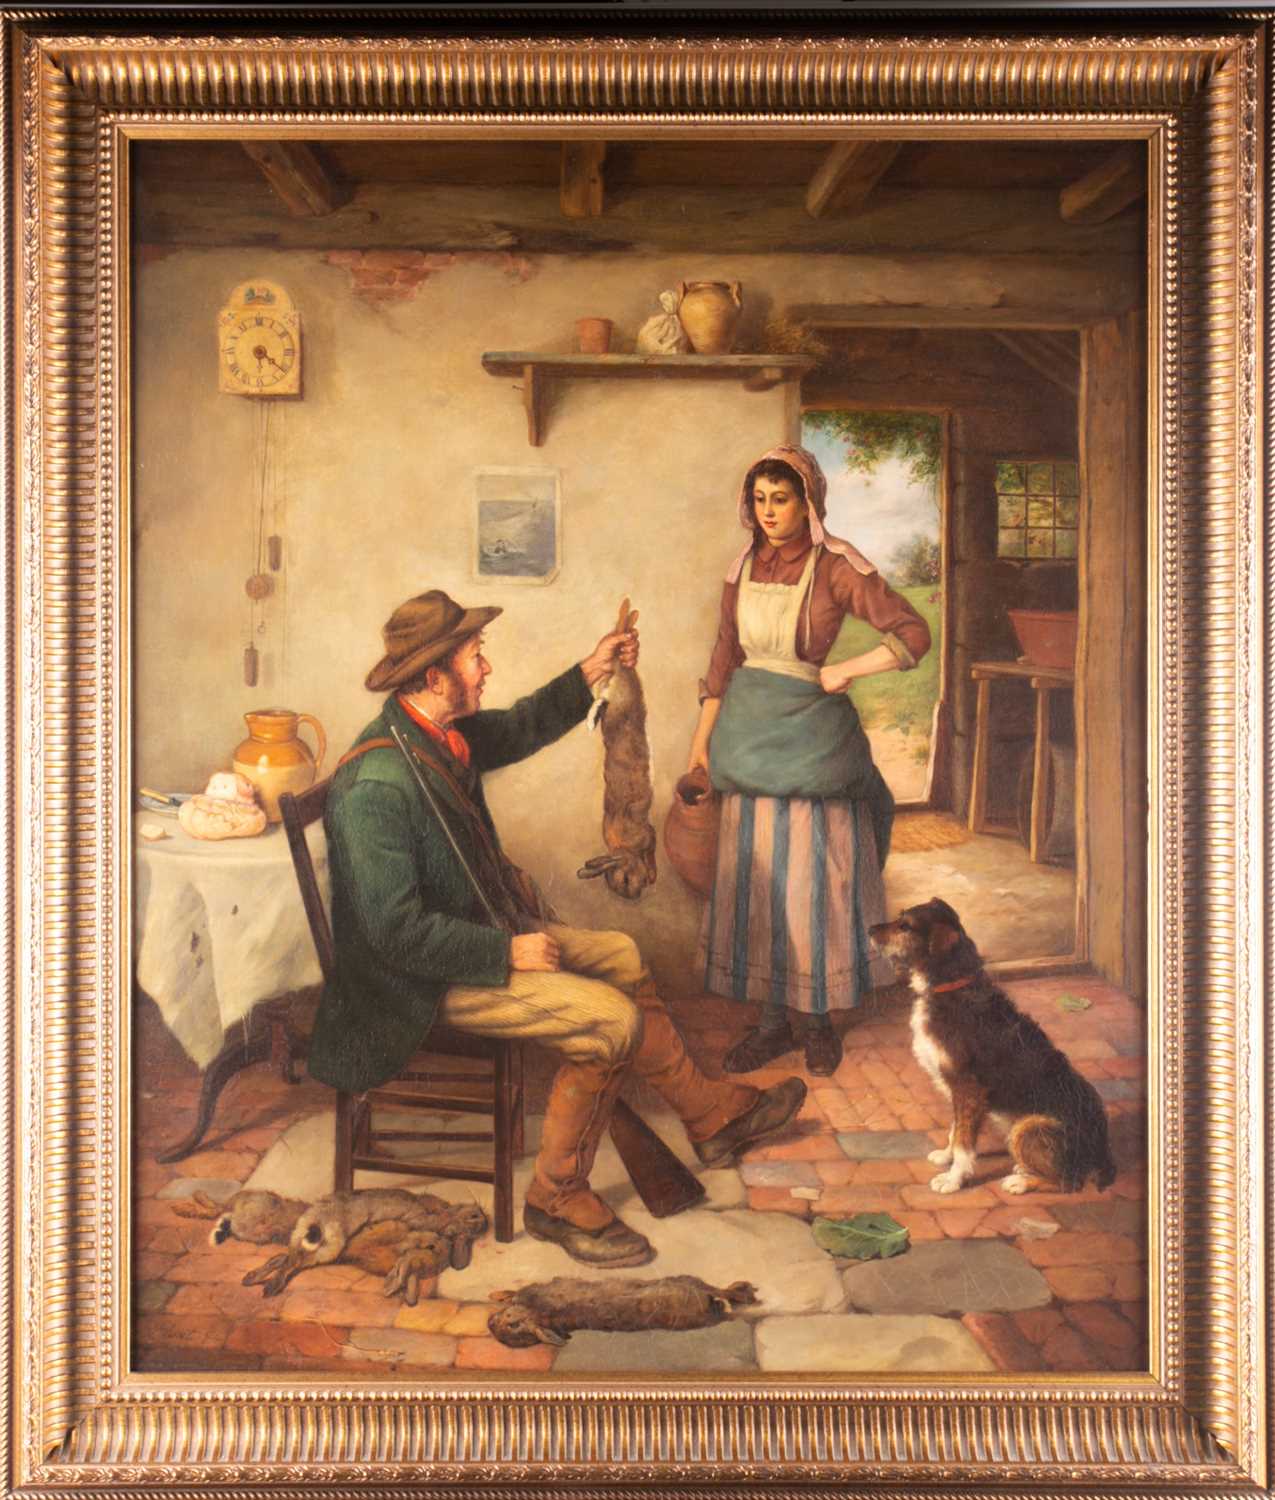 Reuben Hunt (1879-1962), 'One for the Pot', oil on canvas, signed to lower left corner, 75 cm x 62